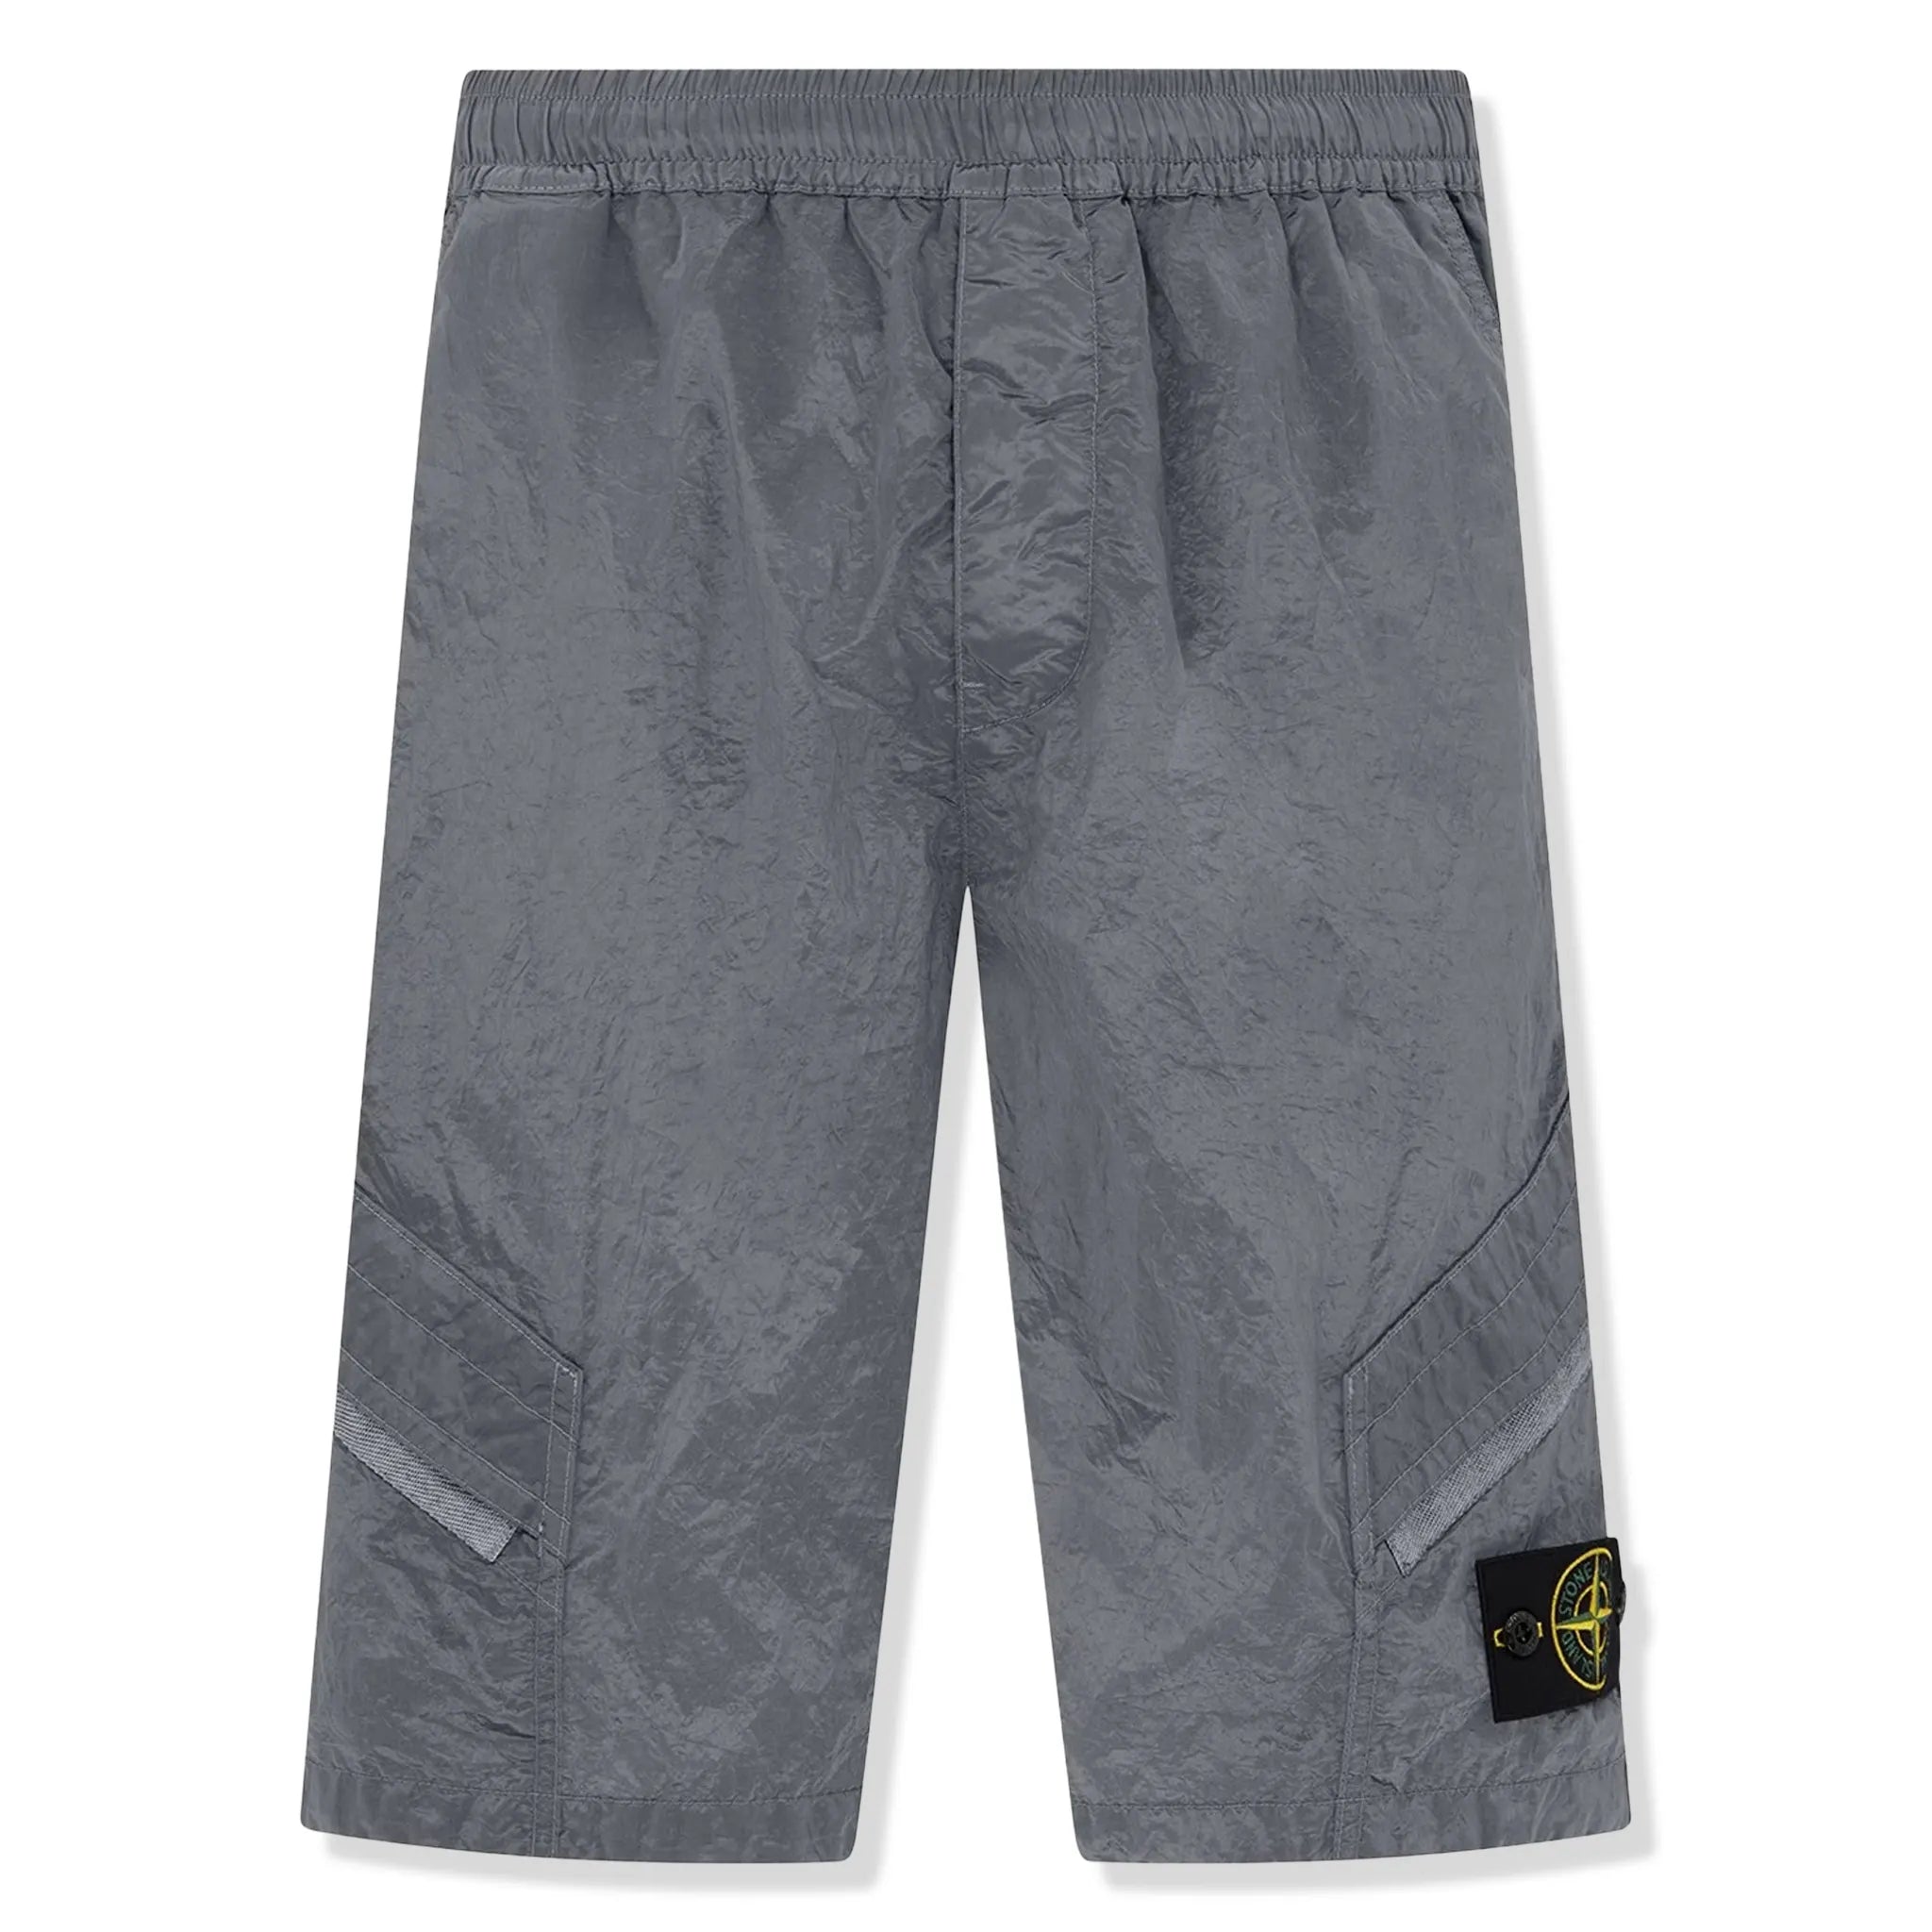 Front view of Stone Island Nylon Metal Grey Shorts